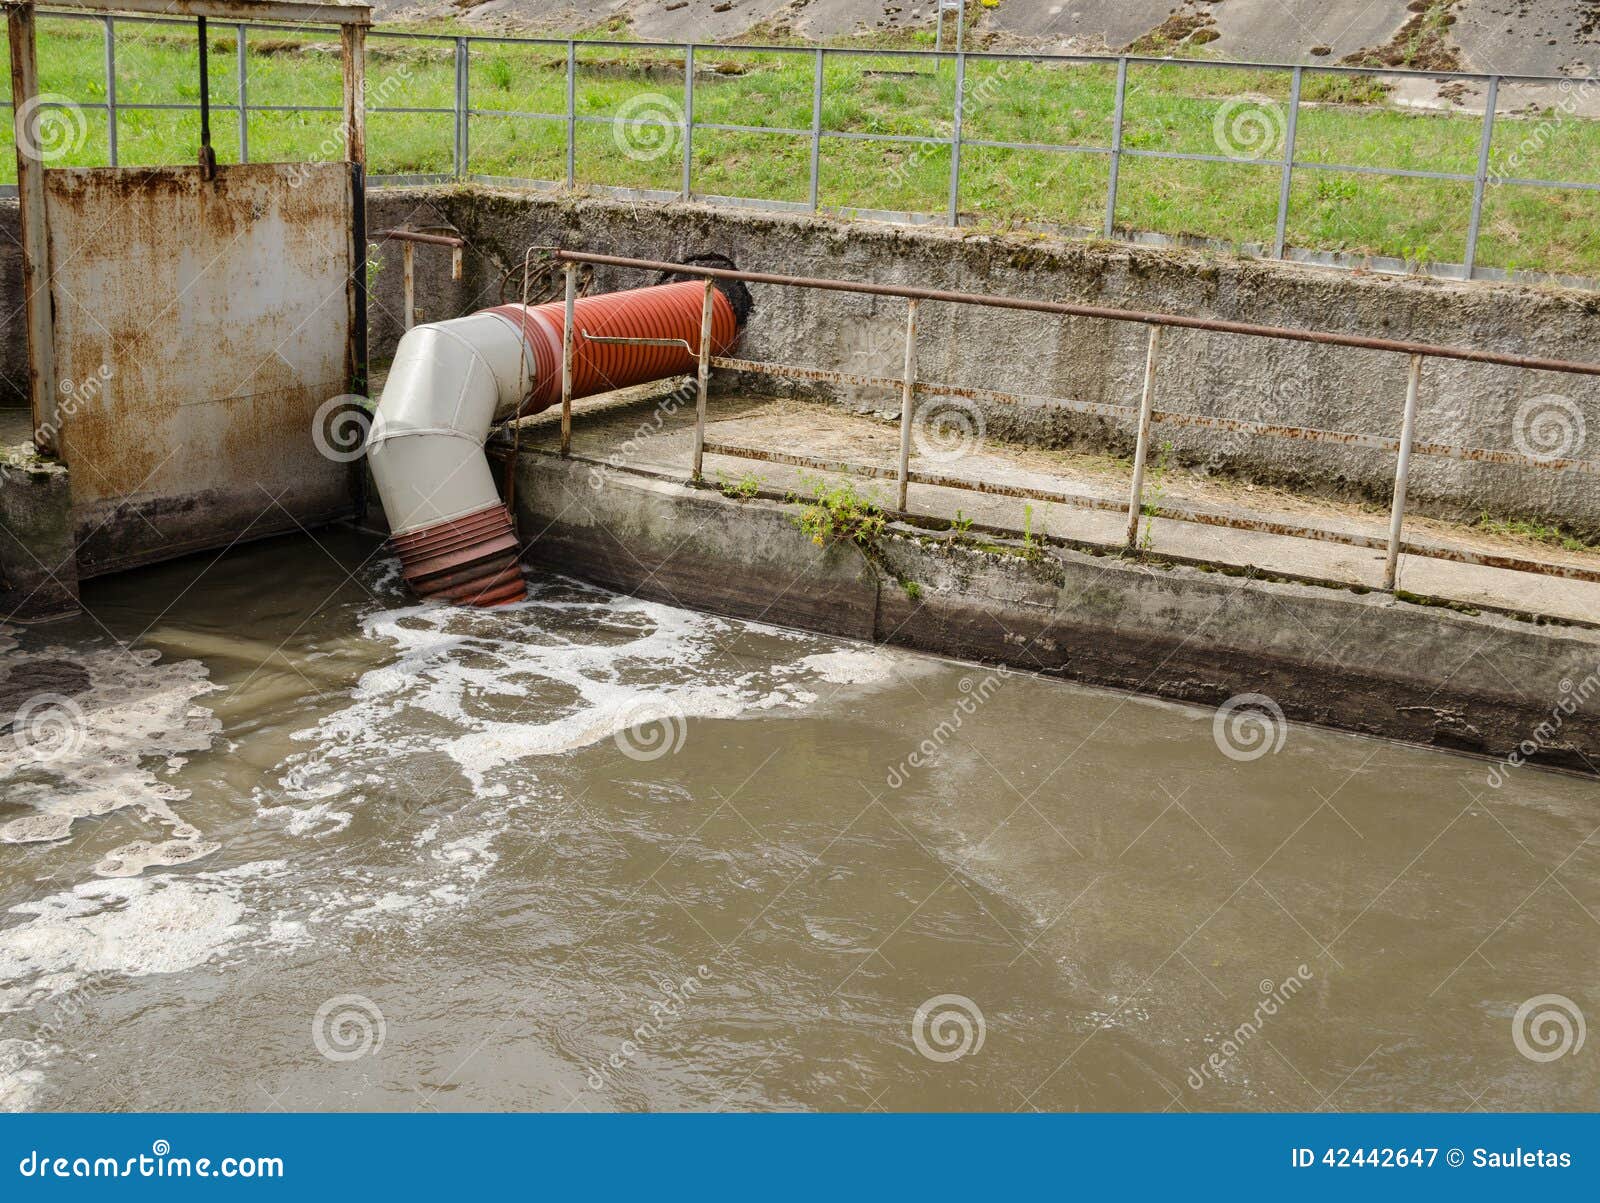 City Sewage Waste Water and Garbage Flow Pipe Tube Stock Image - Image ...